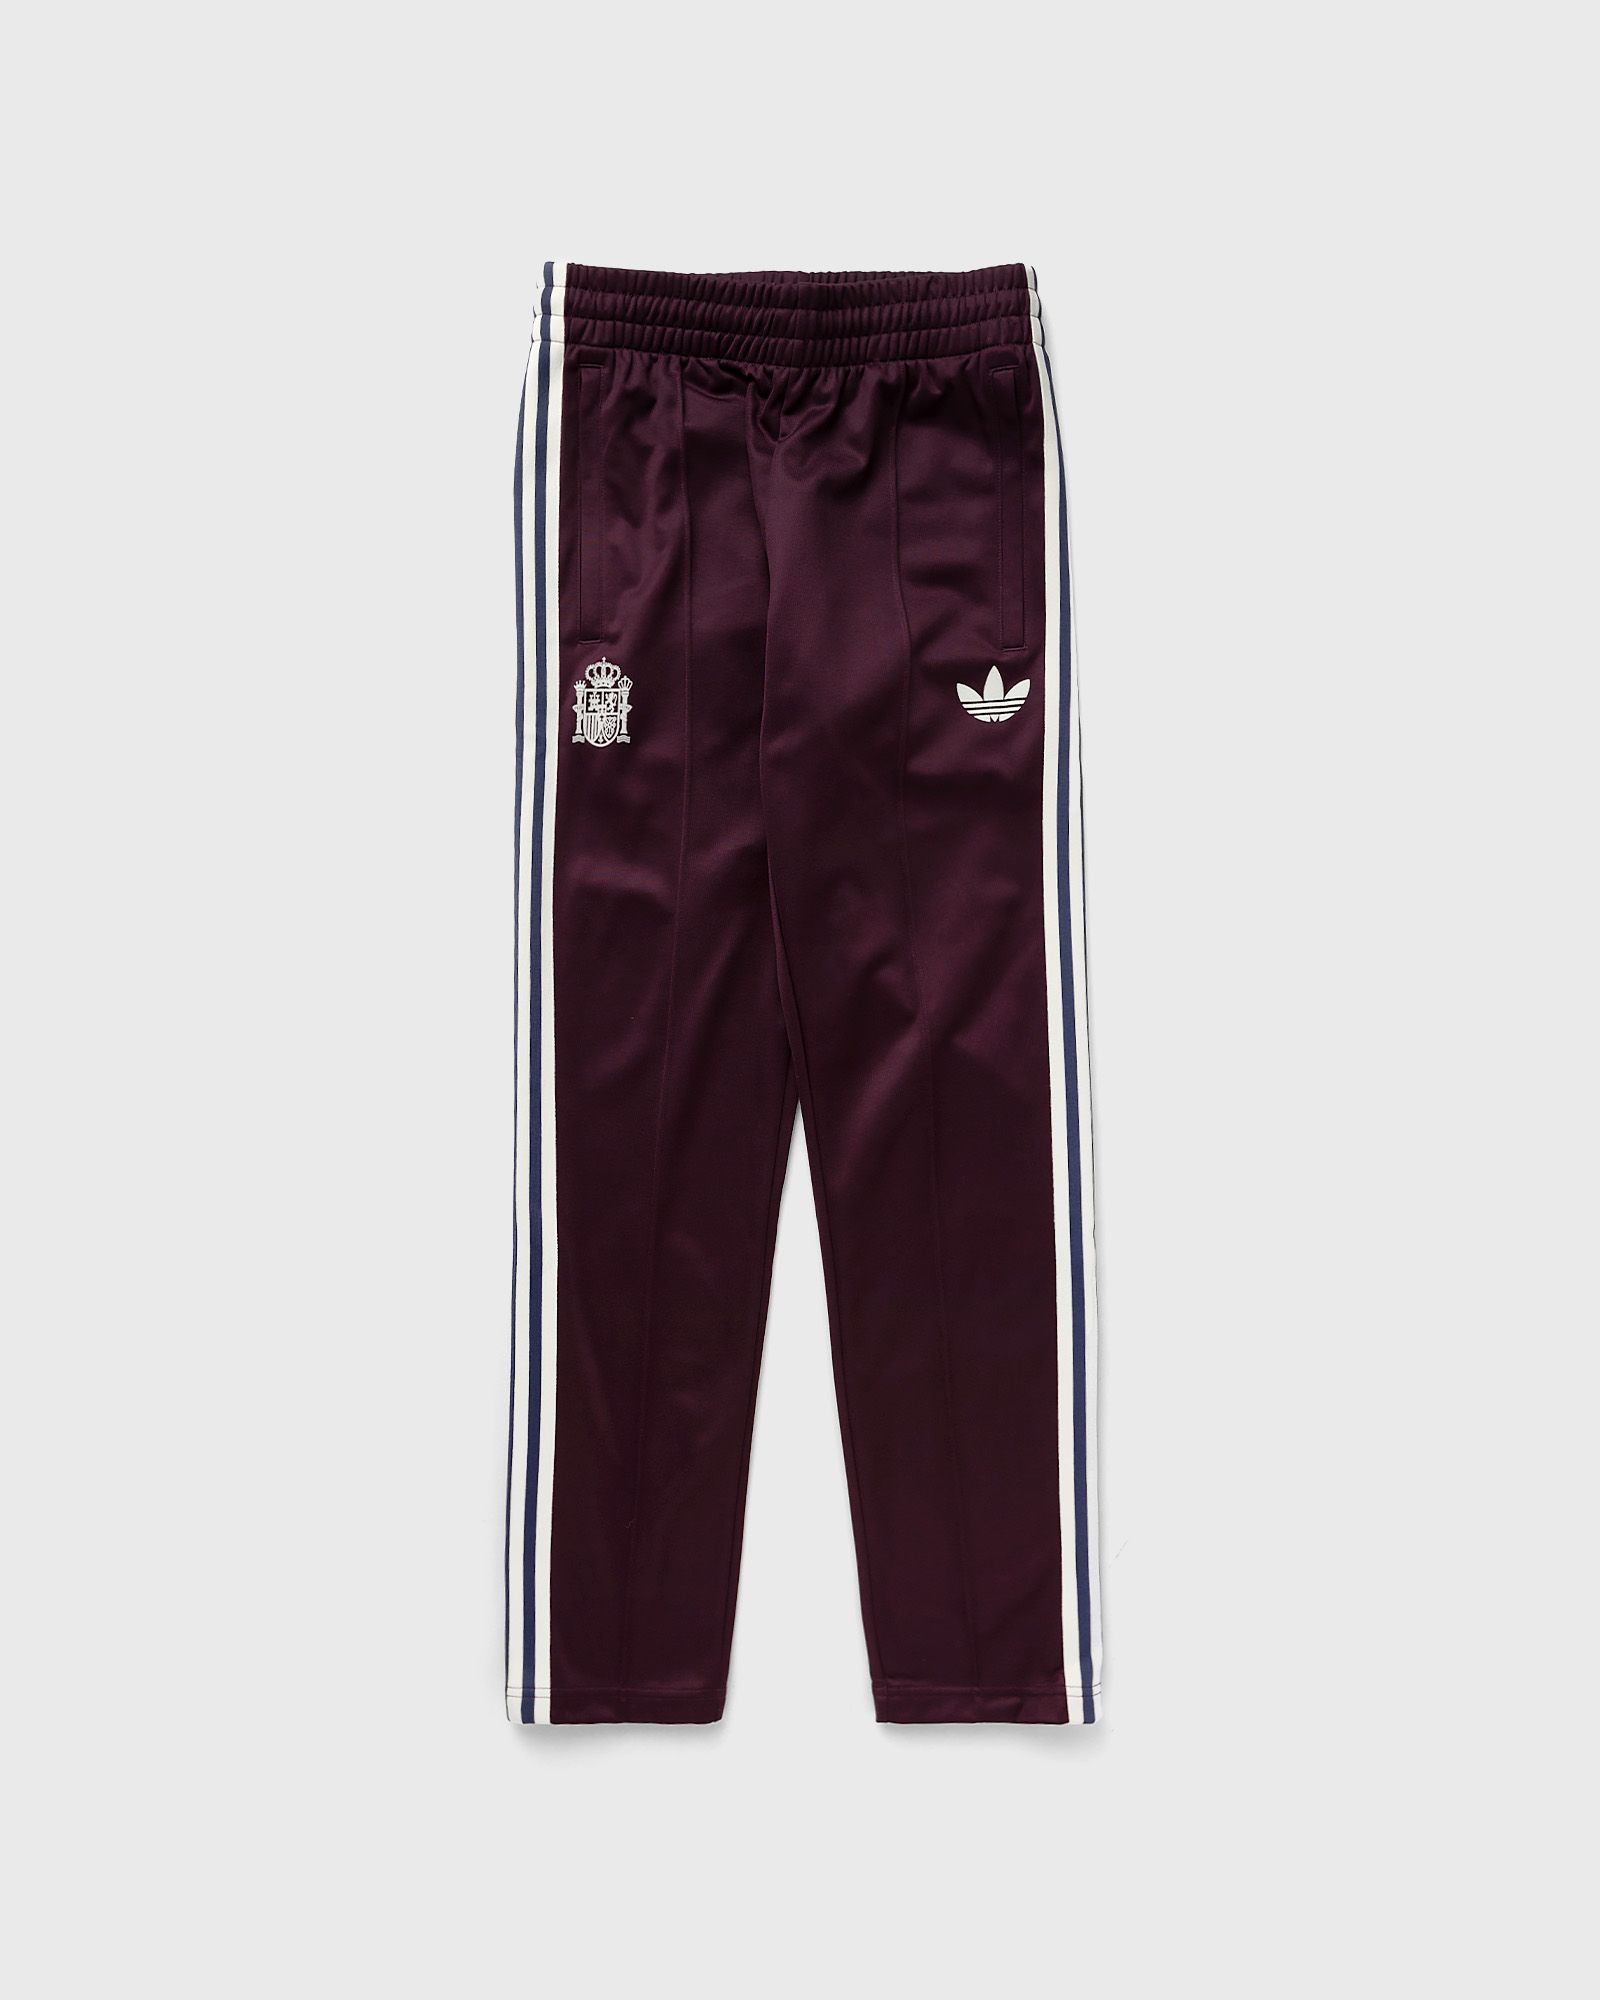 Adidas - spain beckenbauer track pants men track pants purple in größe:xxl